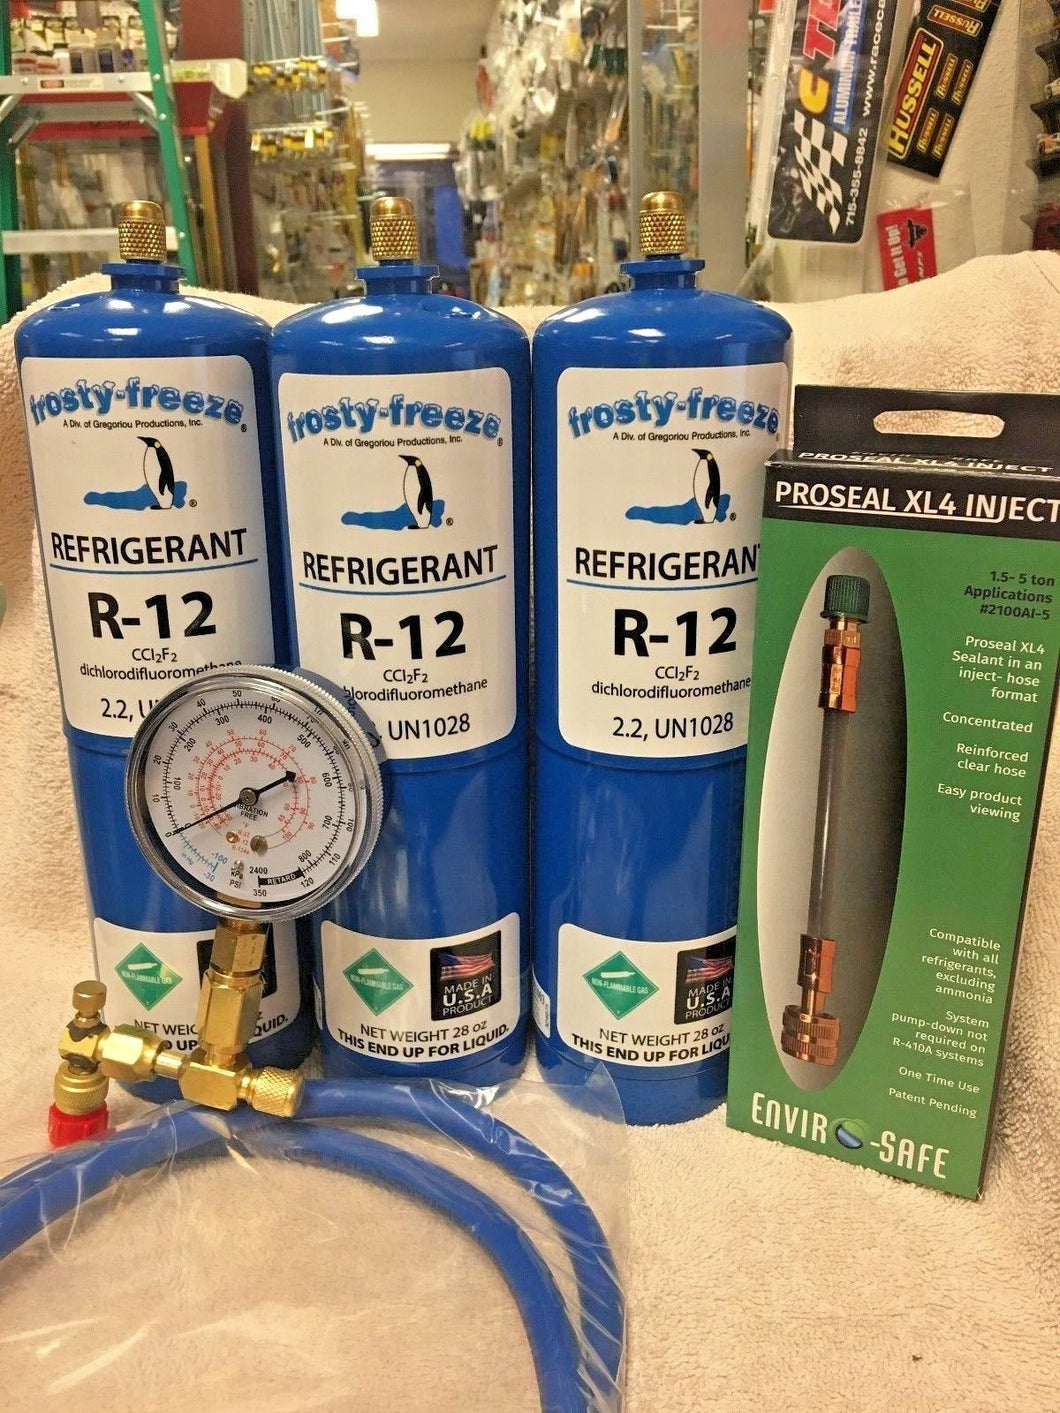 R12, Refrigerant 12, Virgin R-12, 3 Cans Gauge, Hose Pro-Seal XL4 Stop Leak Kit